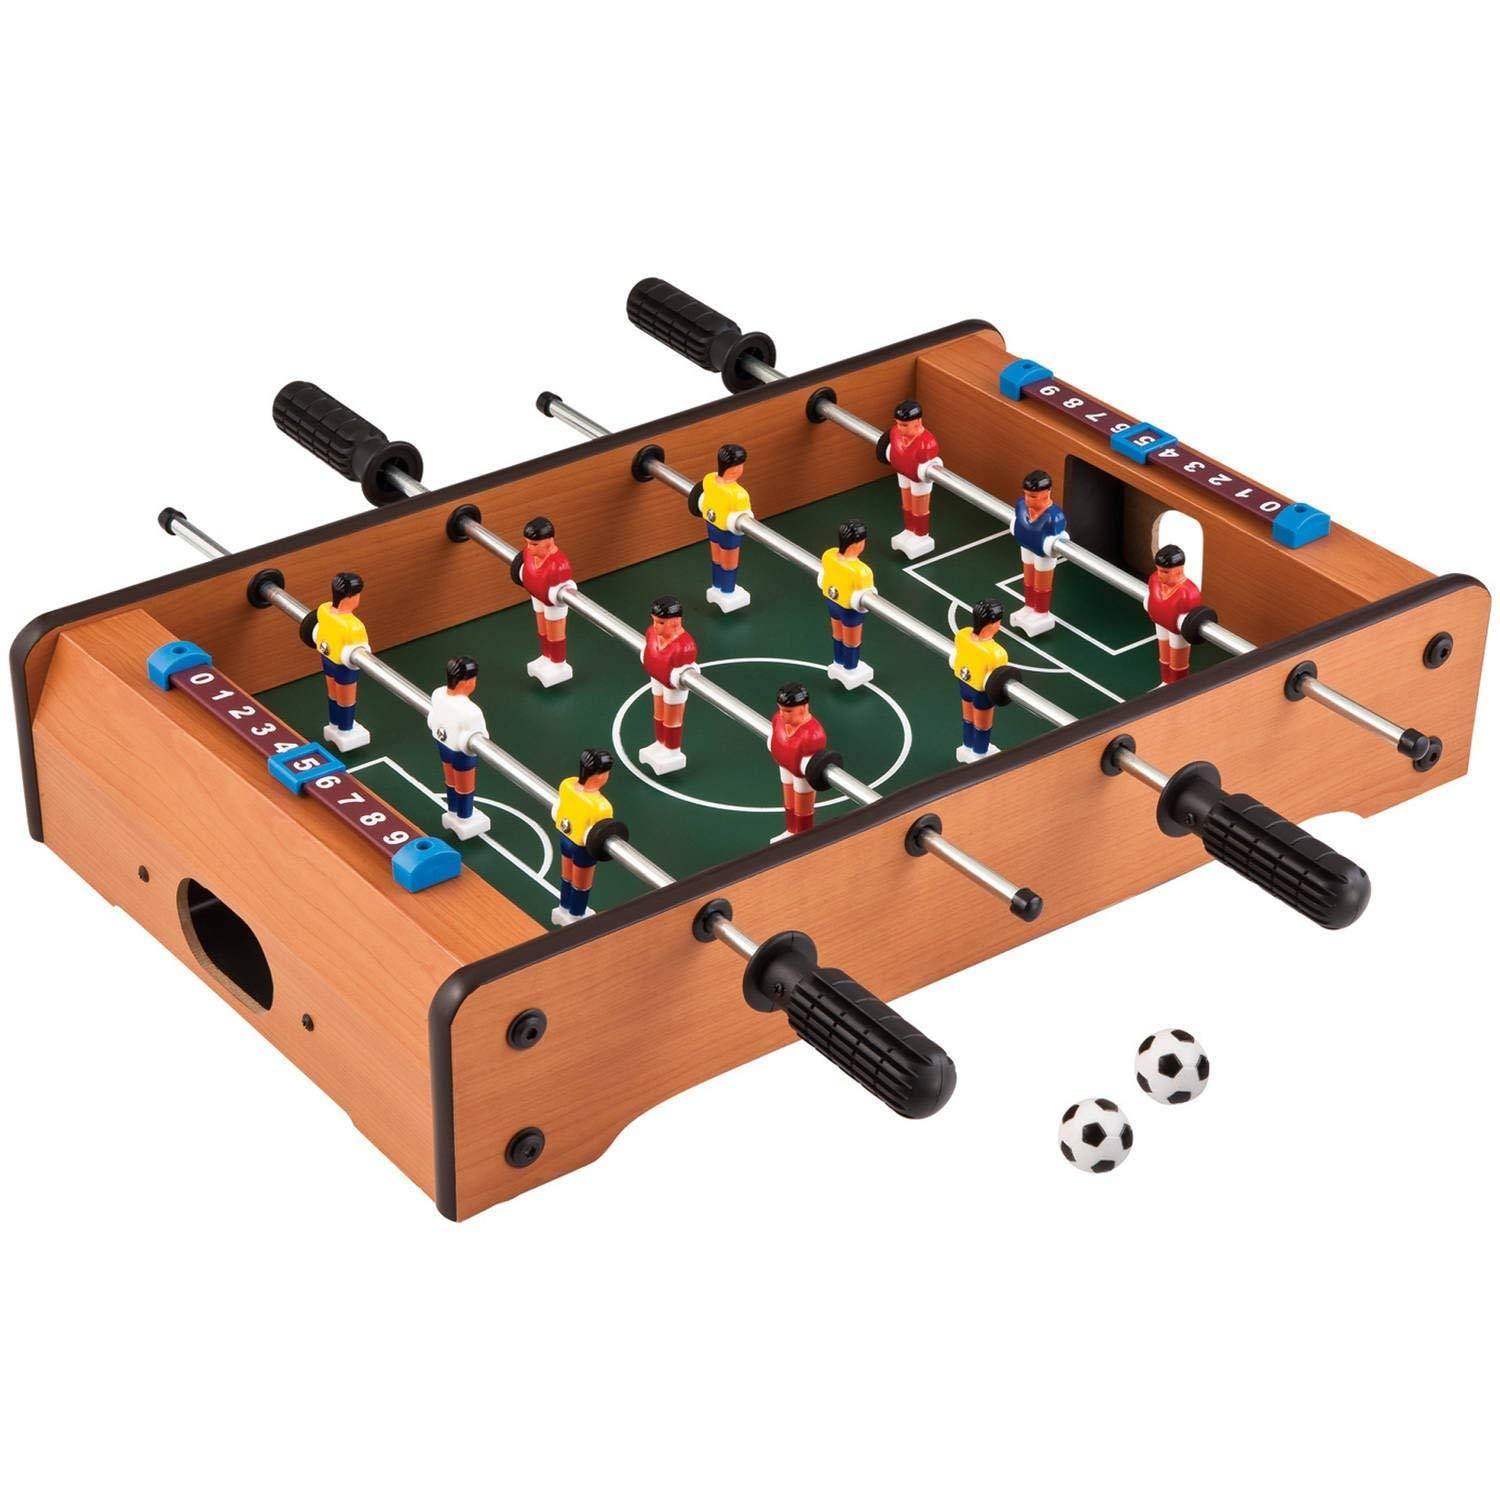 Prokick Mid-Sized Foosball, Mini Football, Table Soccer Game 51 Cms